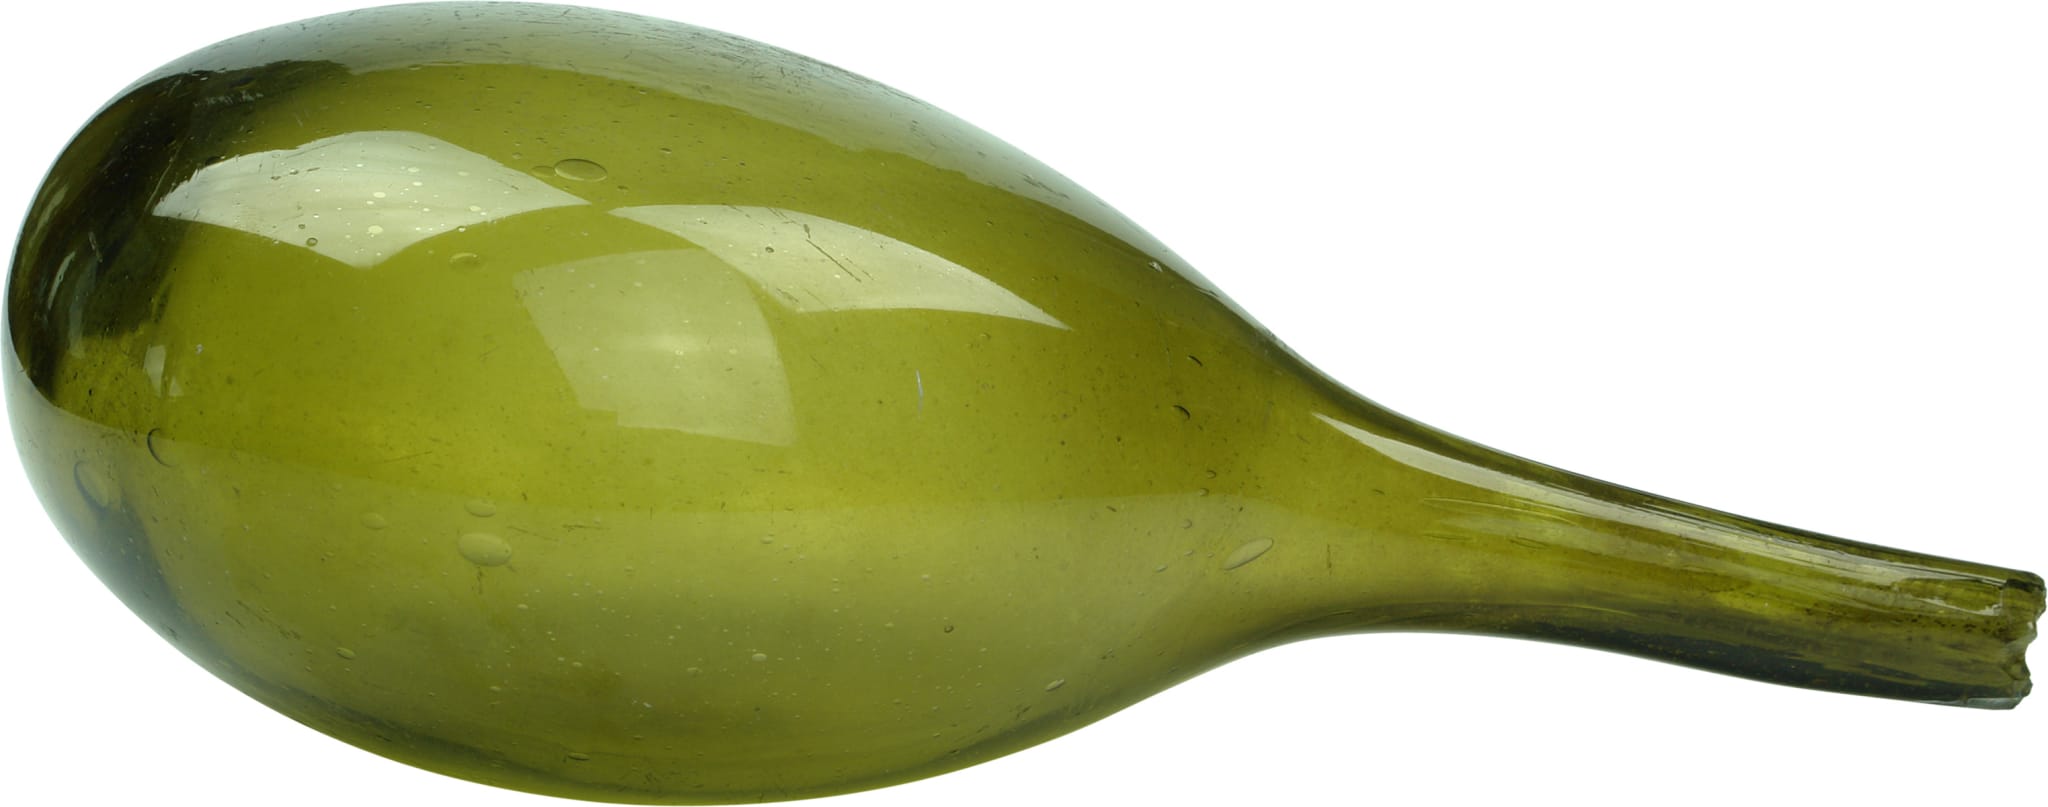 Bladder shaped green glass bottle